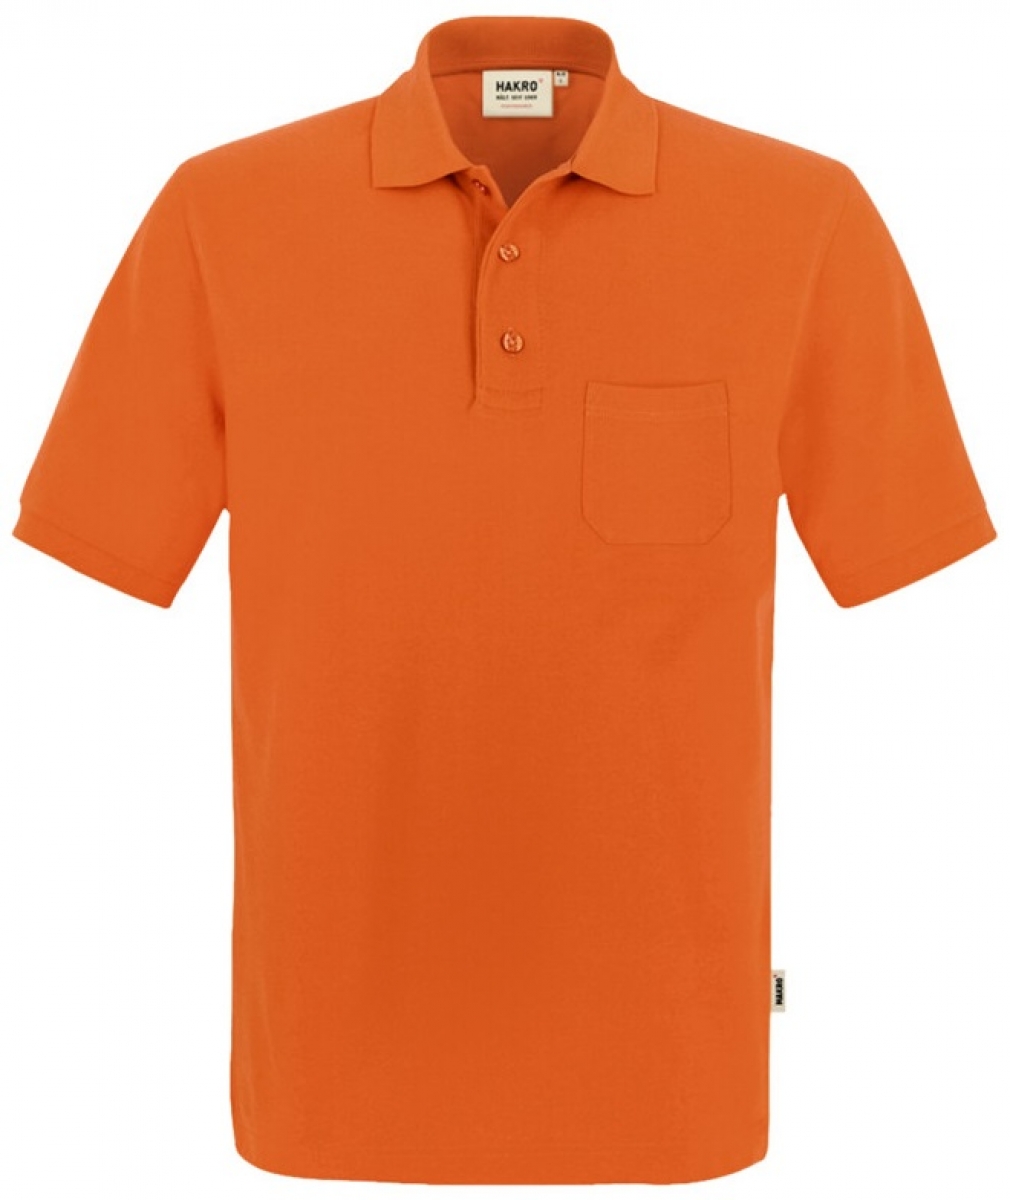 HAKRO-Worker-Shirts, Pocket-Poloshirt Performance, orange